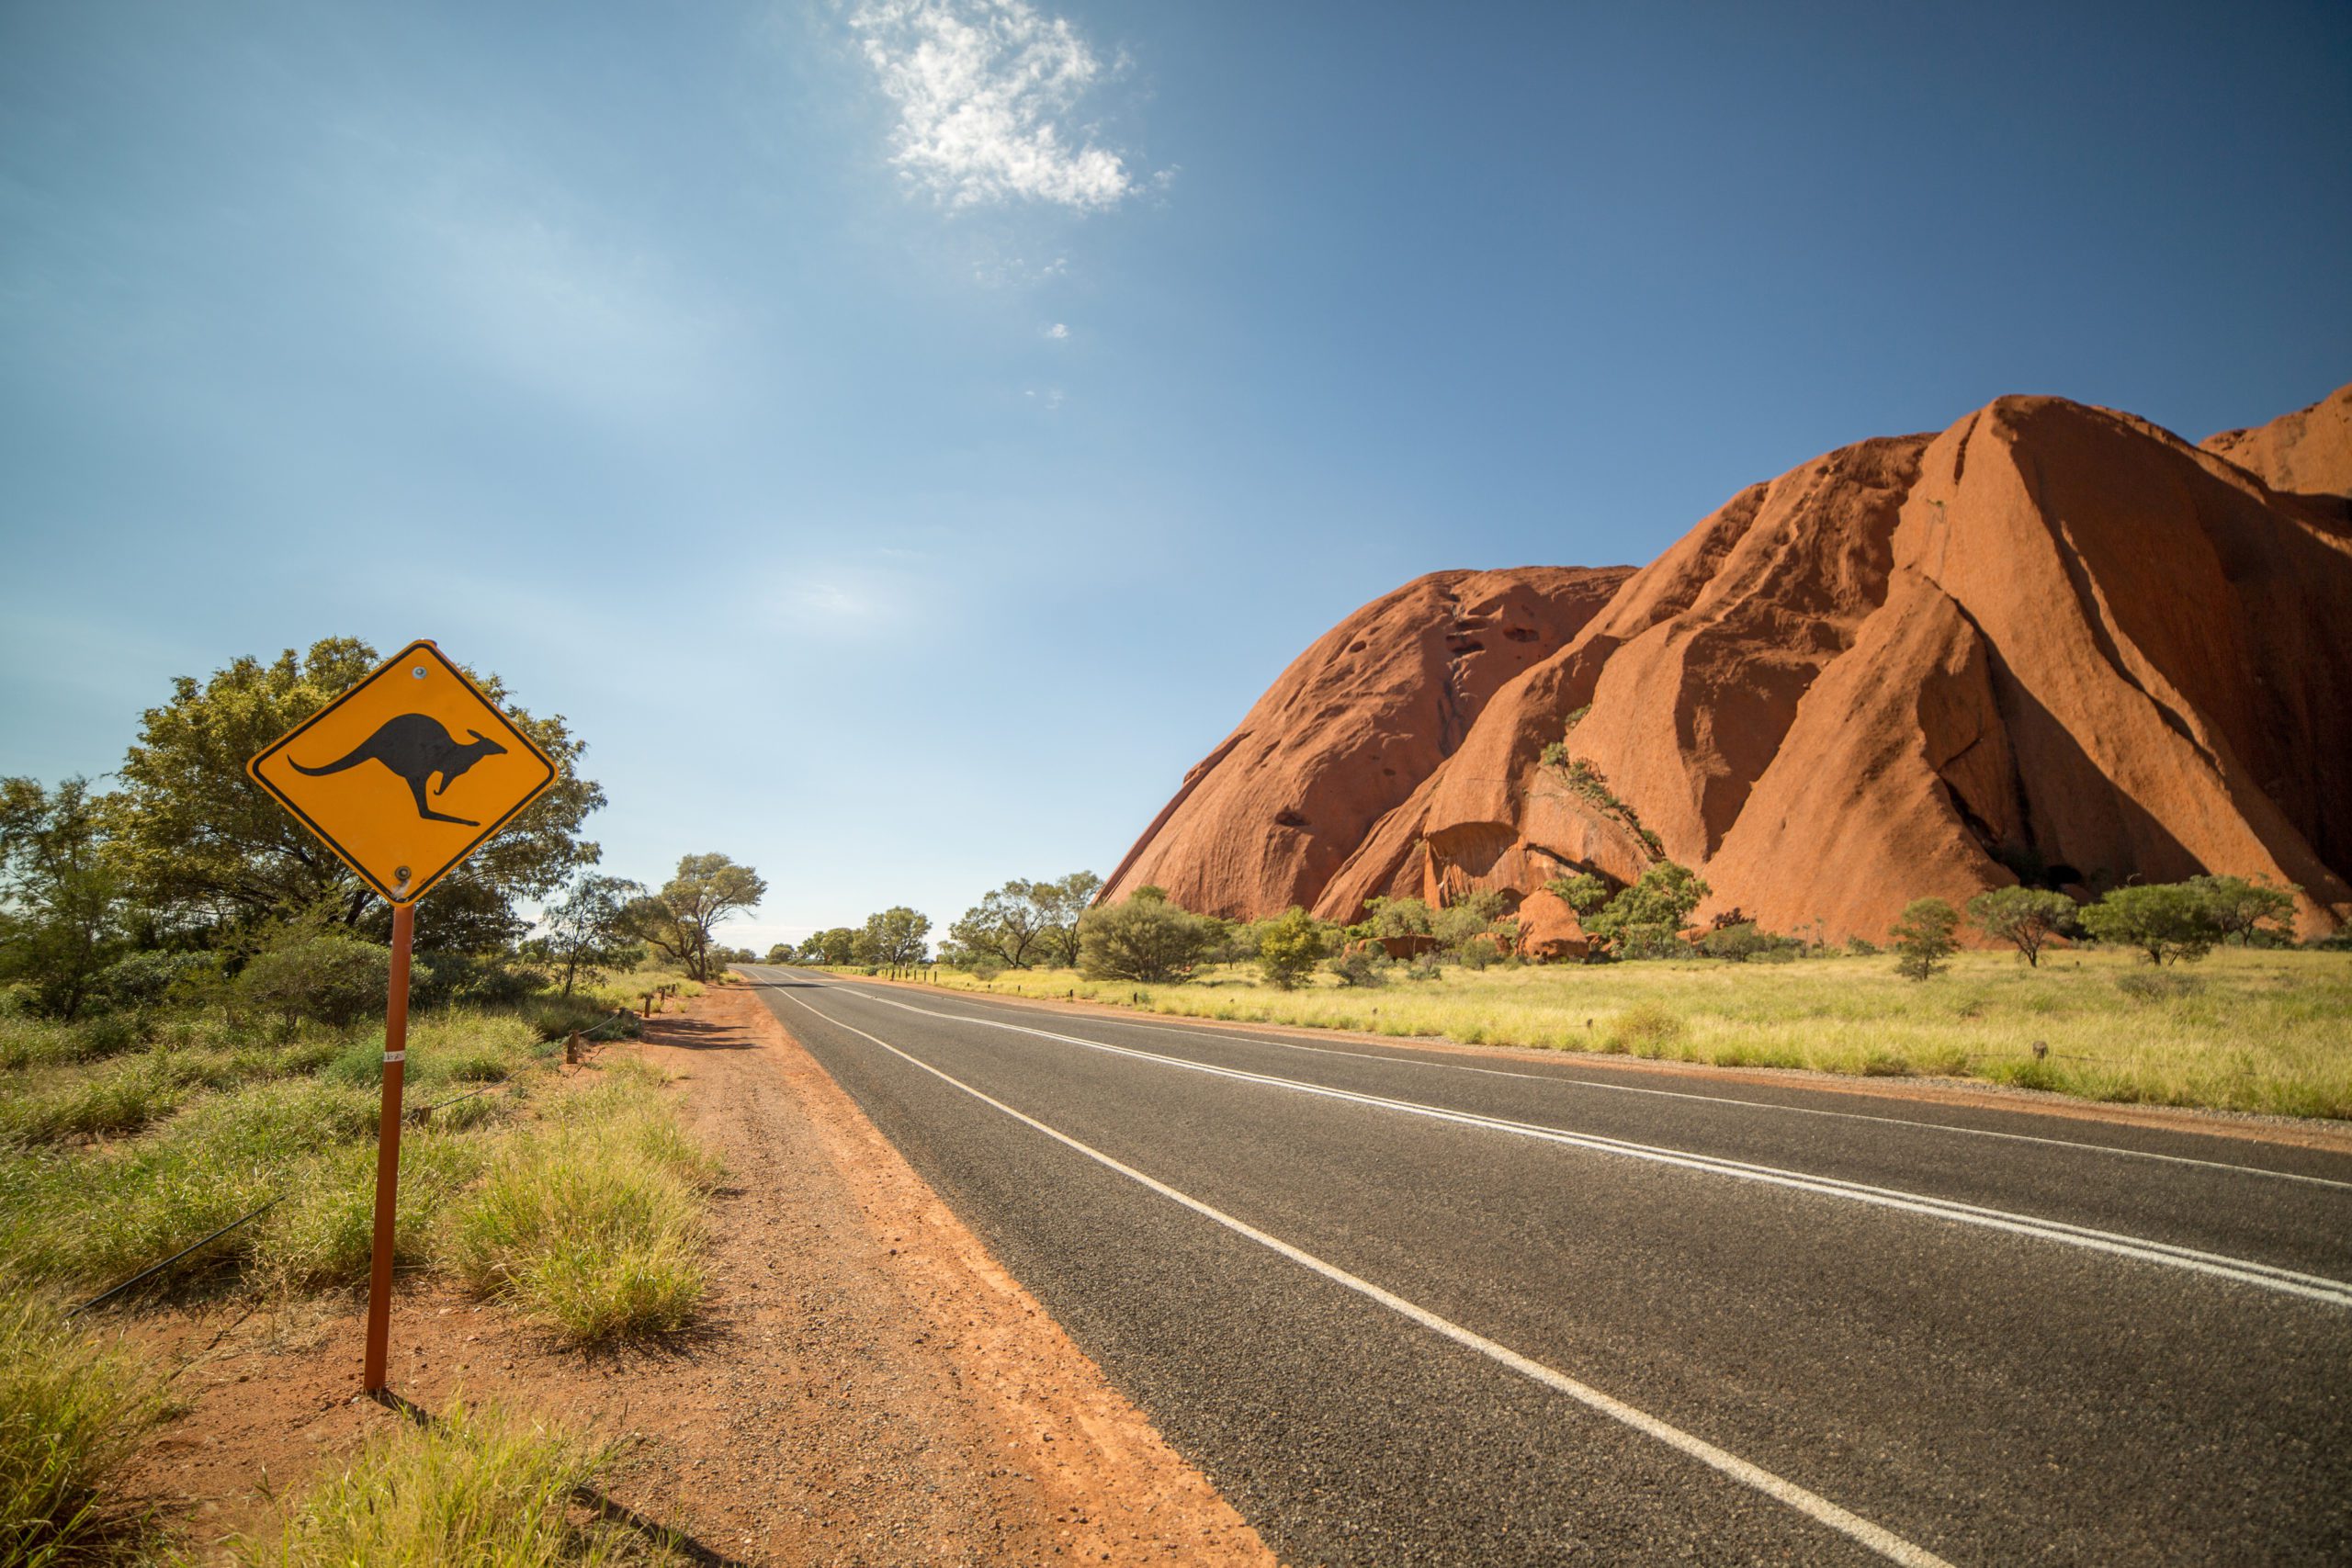 Kangaroo warning sign in the outback, Australia